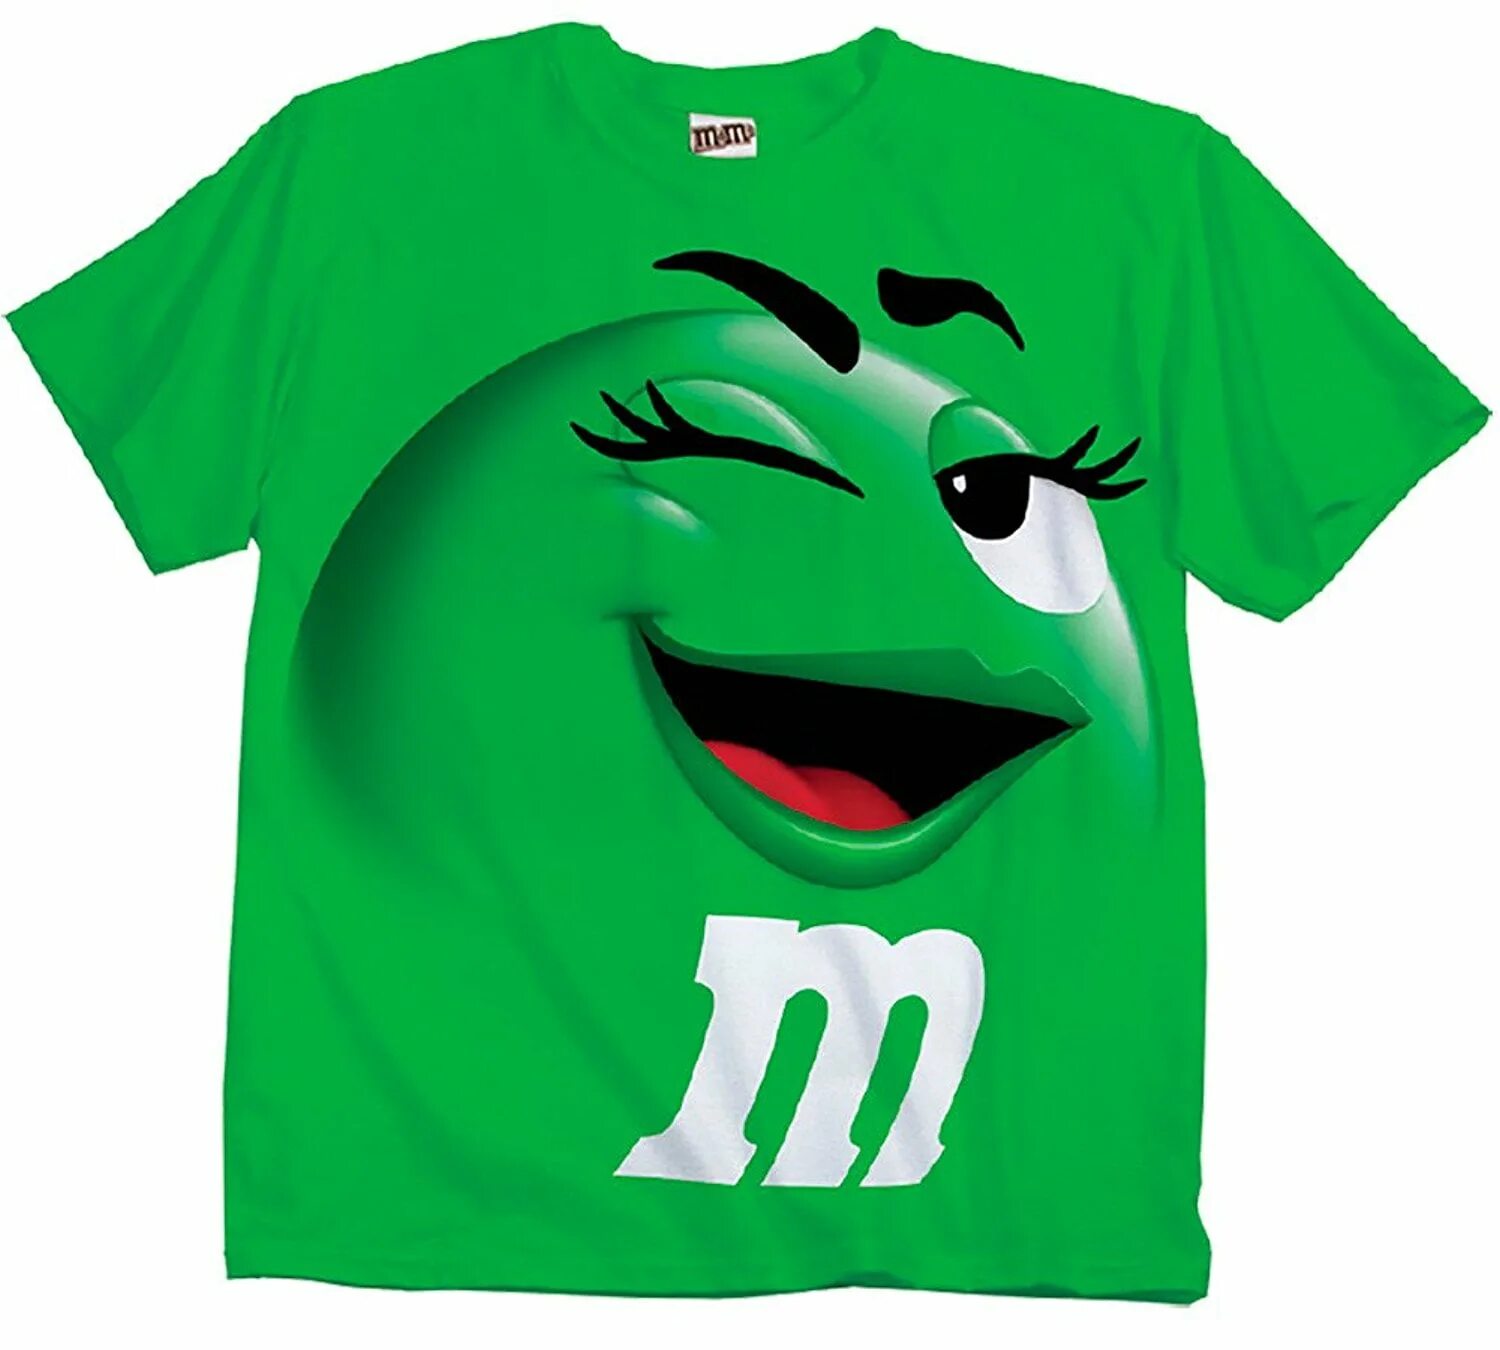 Футболка m&MS. Mms футболка. Mms зеленый. M MS зелёный. Футболка m m s